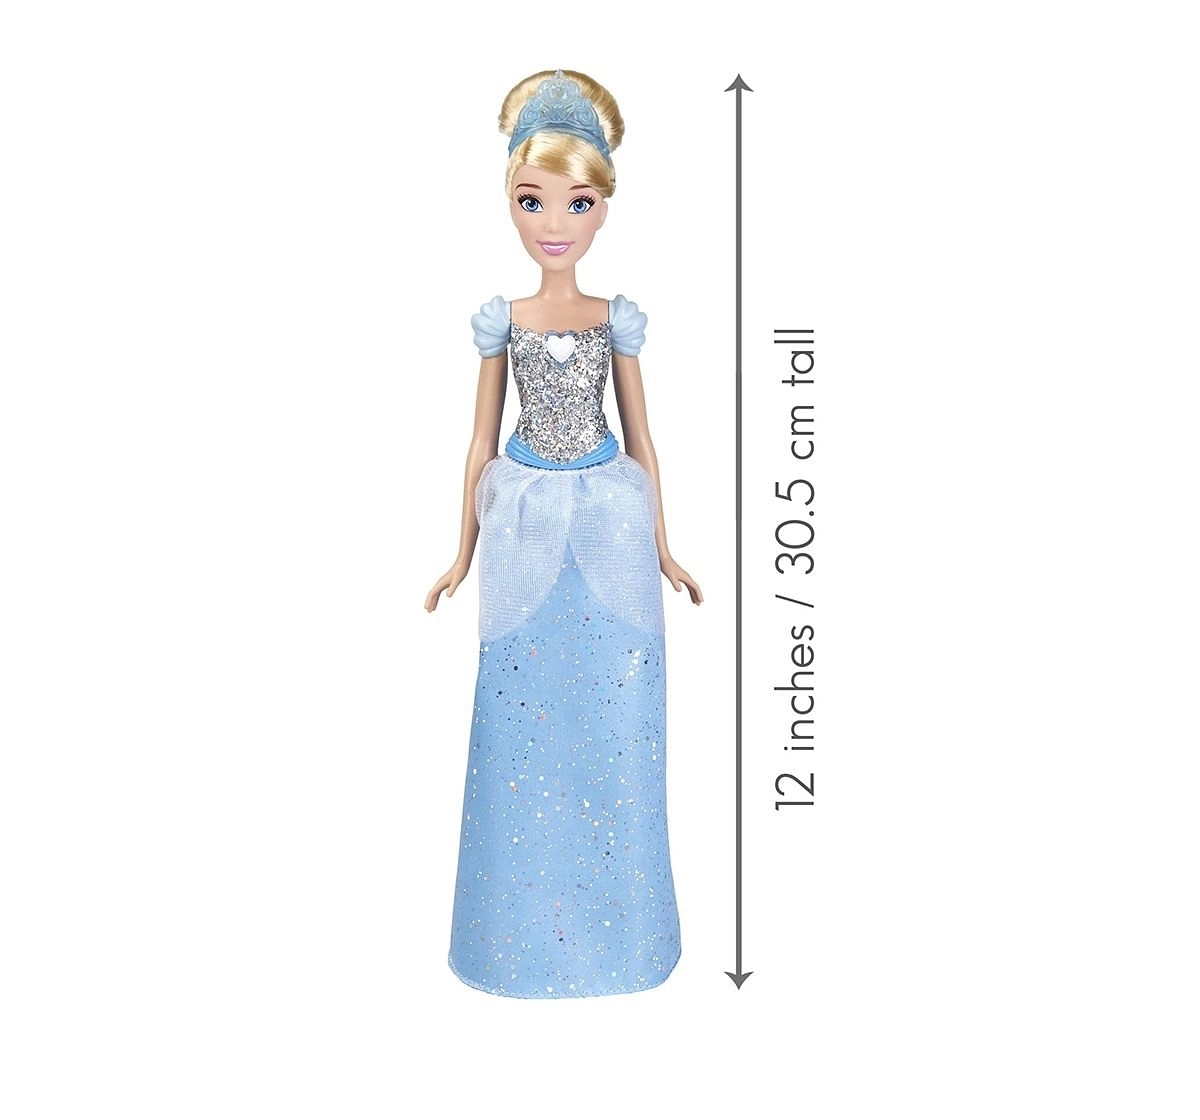 Disney Princess Royal Shimmer Cinderella Dolls & Accessories for age 3Y+ 